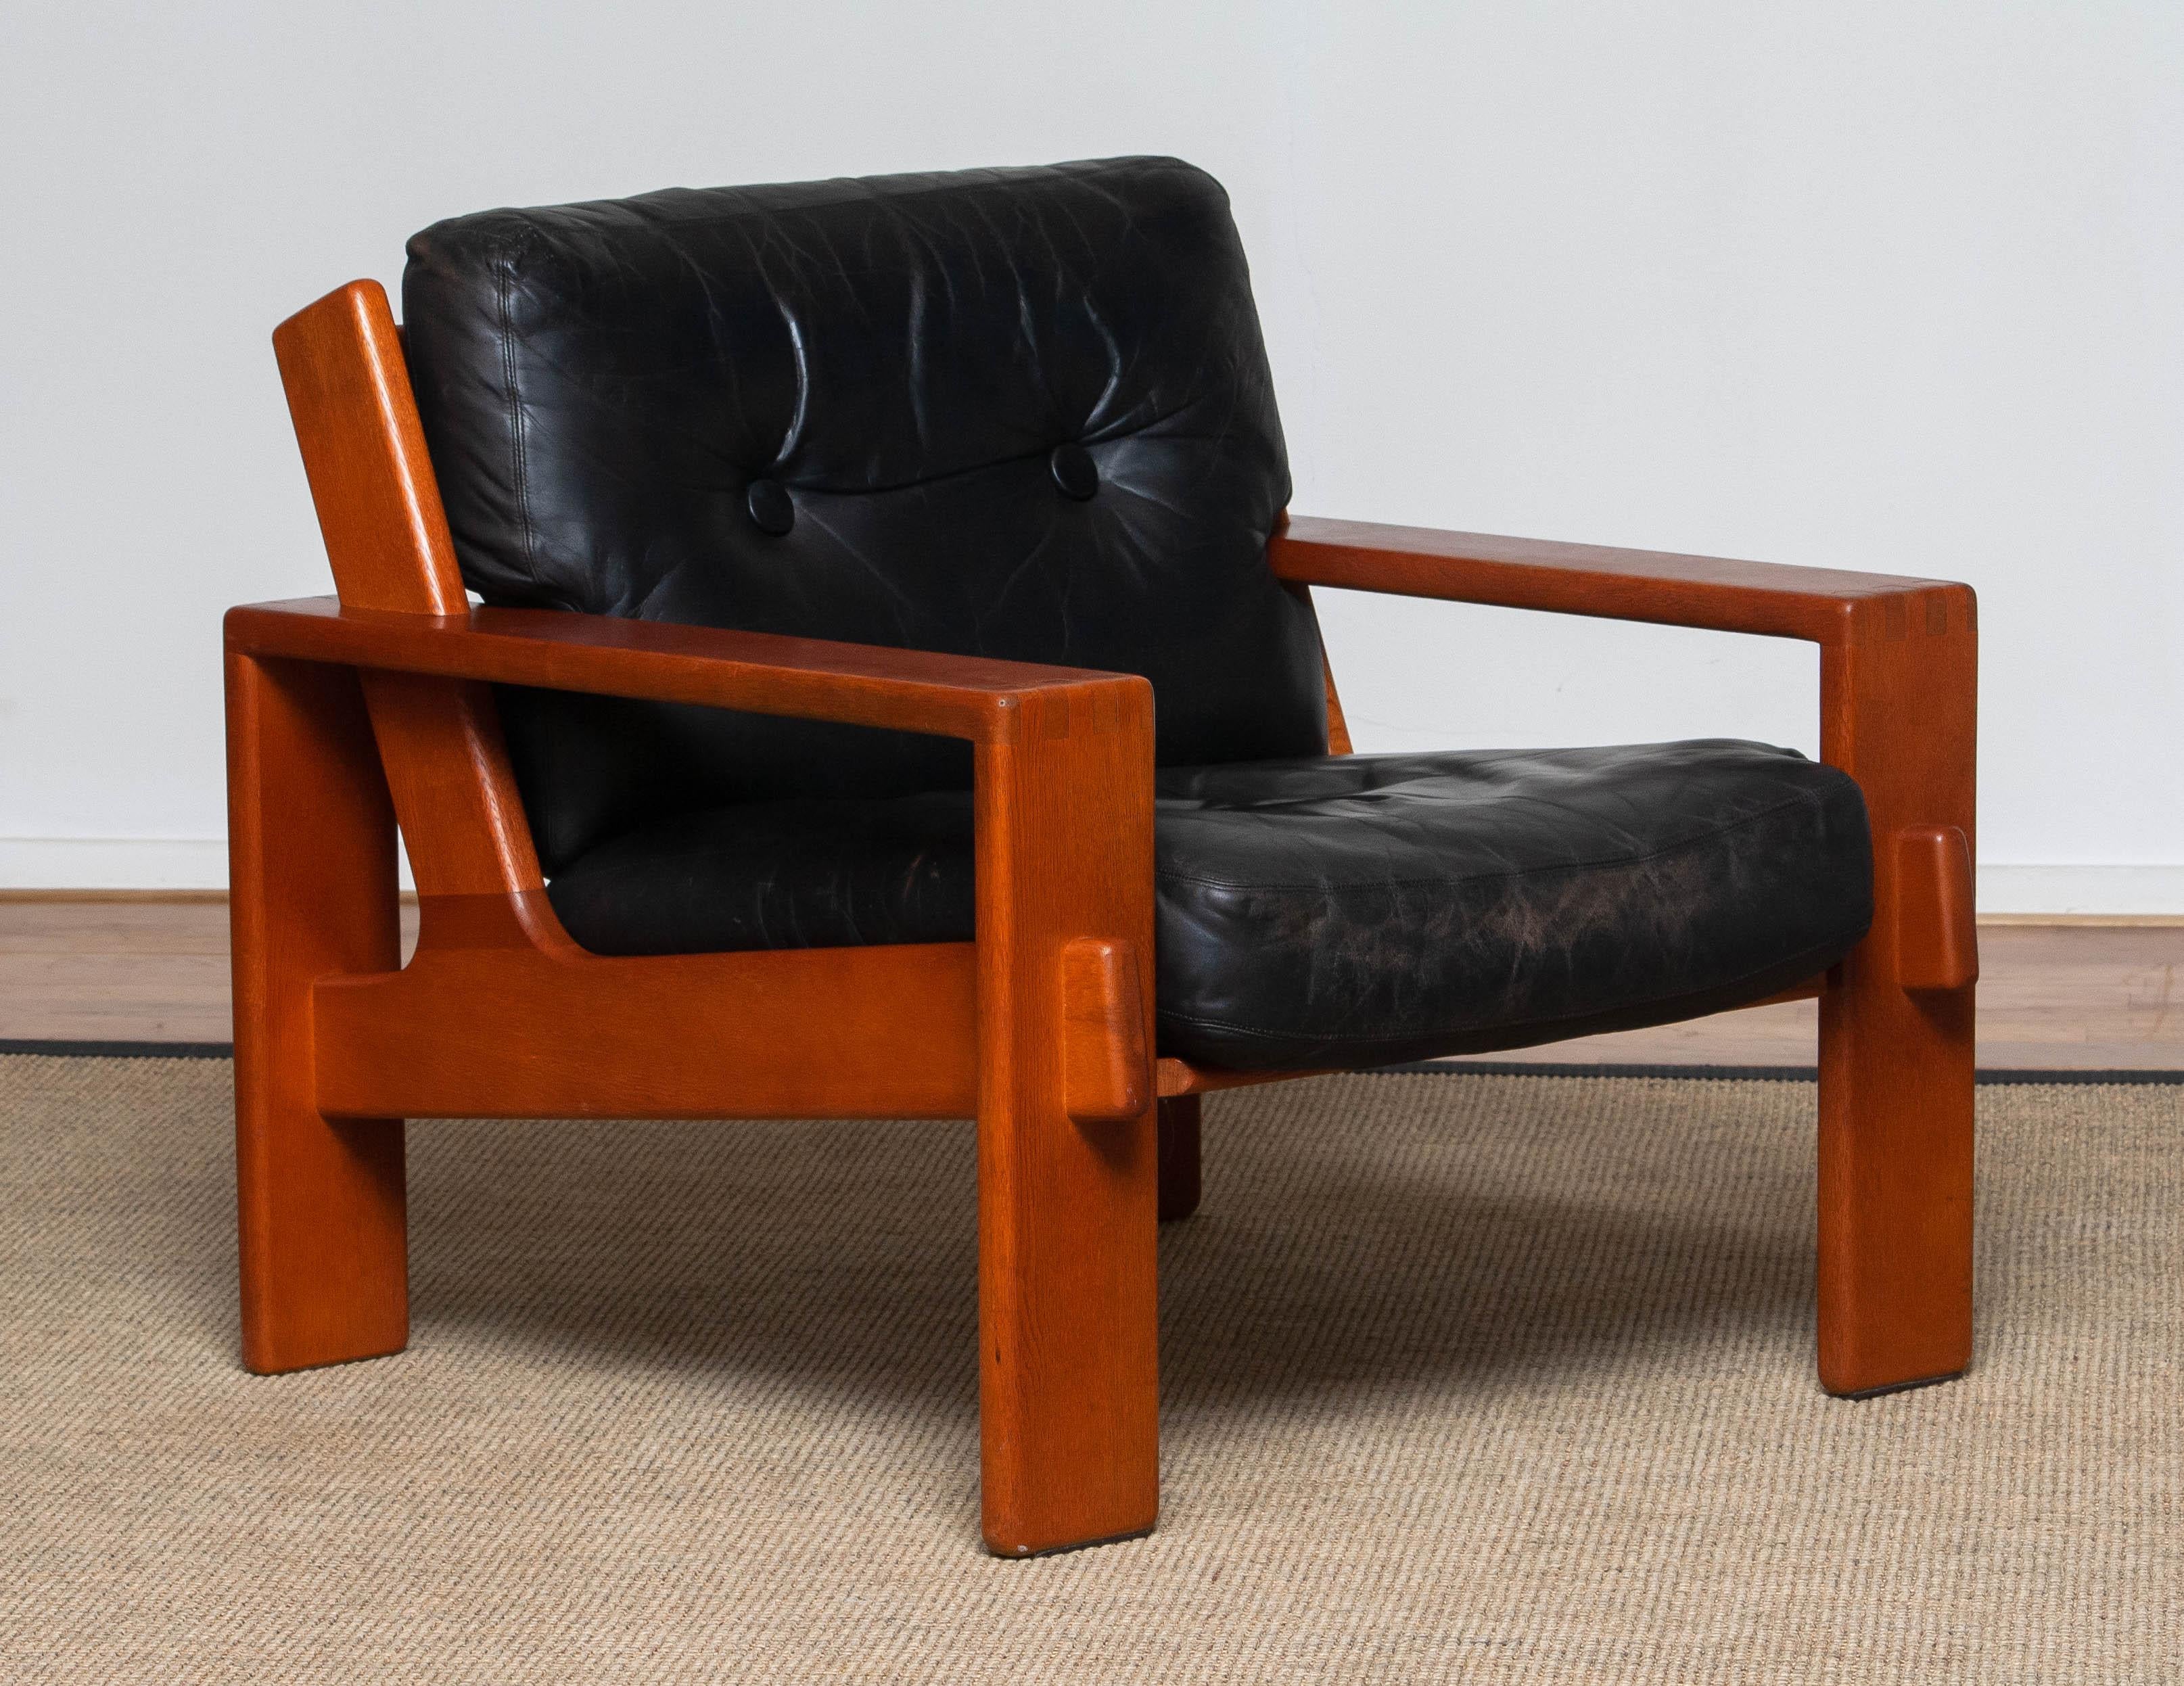 1960 Pair Teak and Black Leather Cubist Lounge Chair by Esko Pajamies for Asko In Good Condition In Silvolde, Gelderland